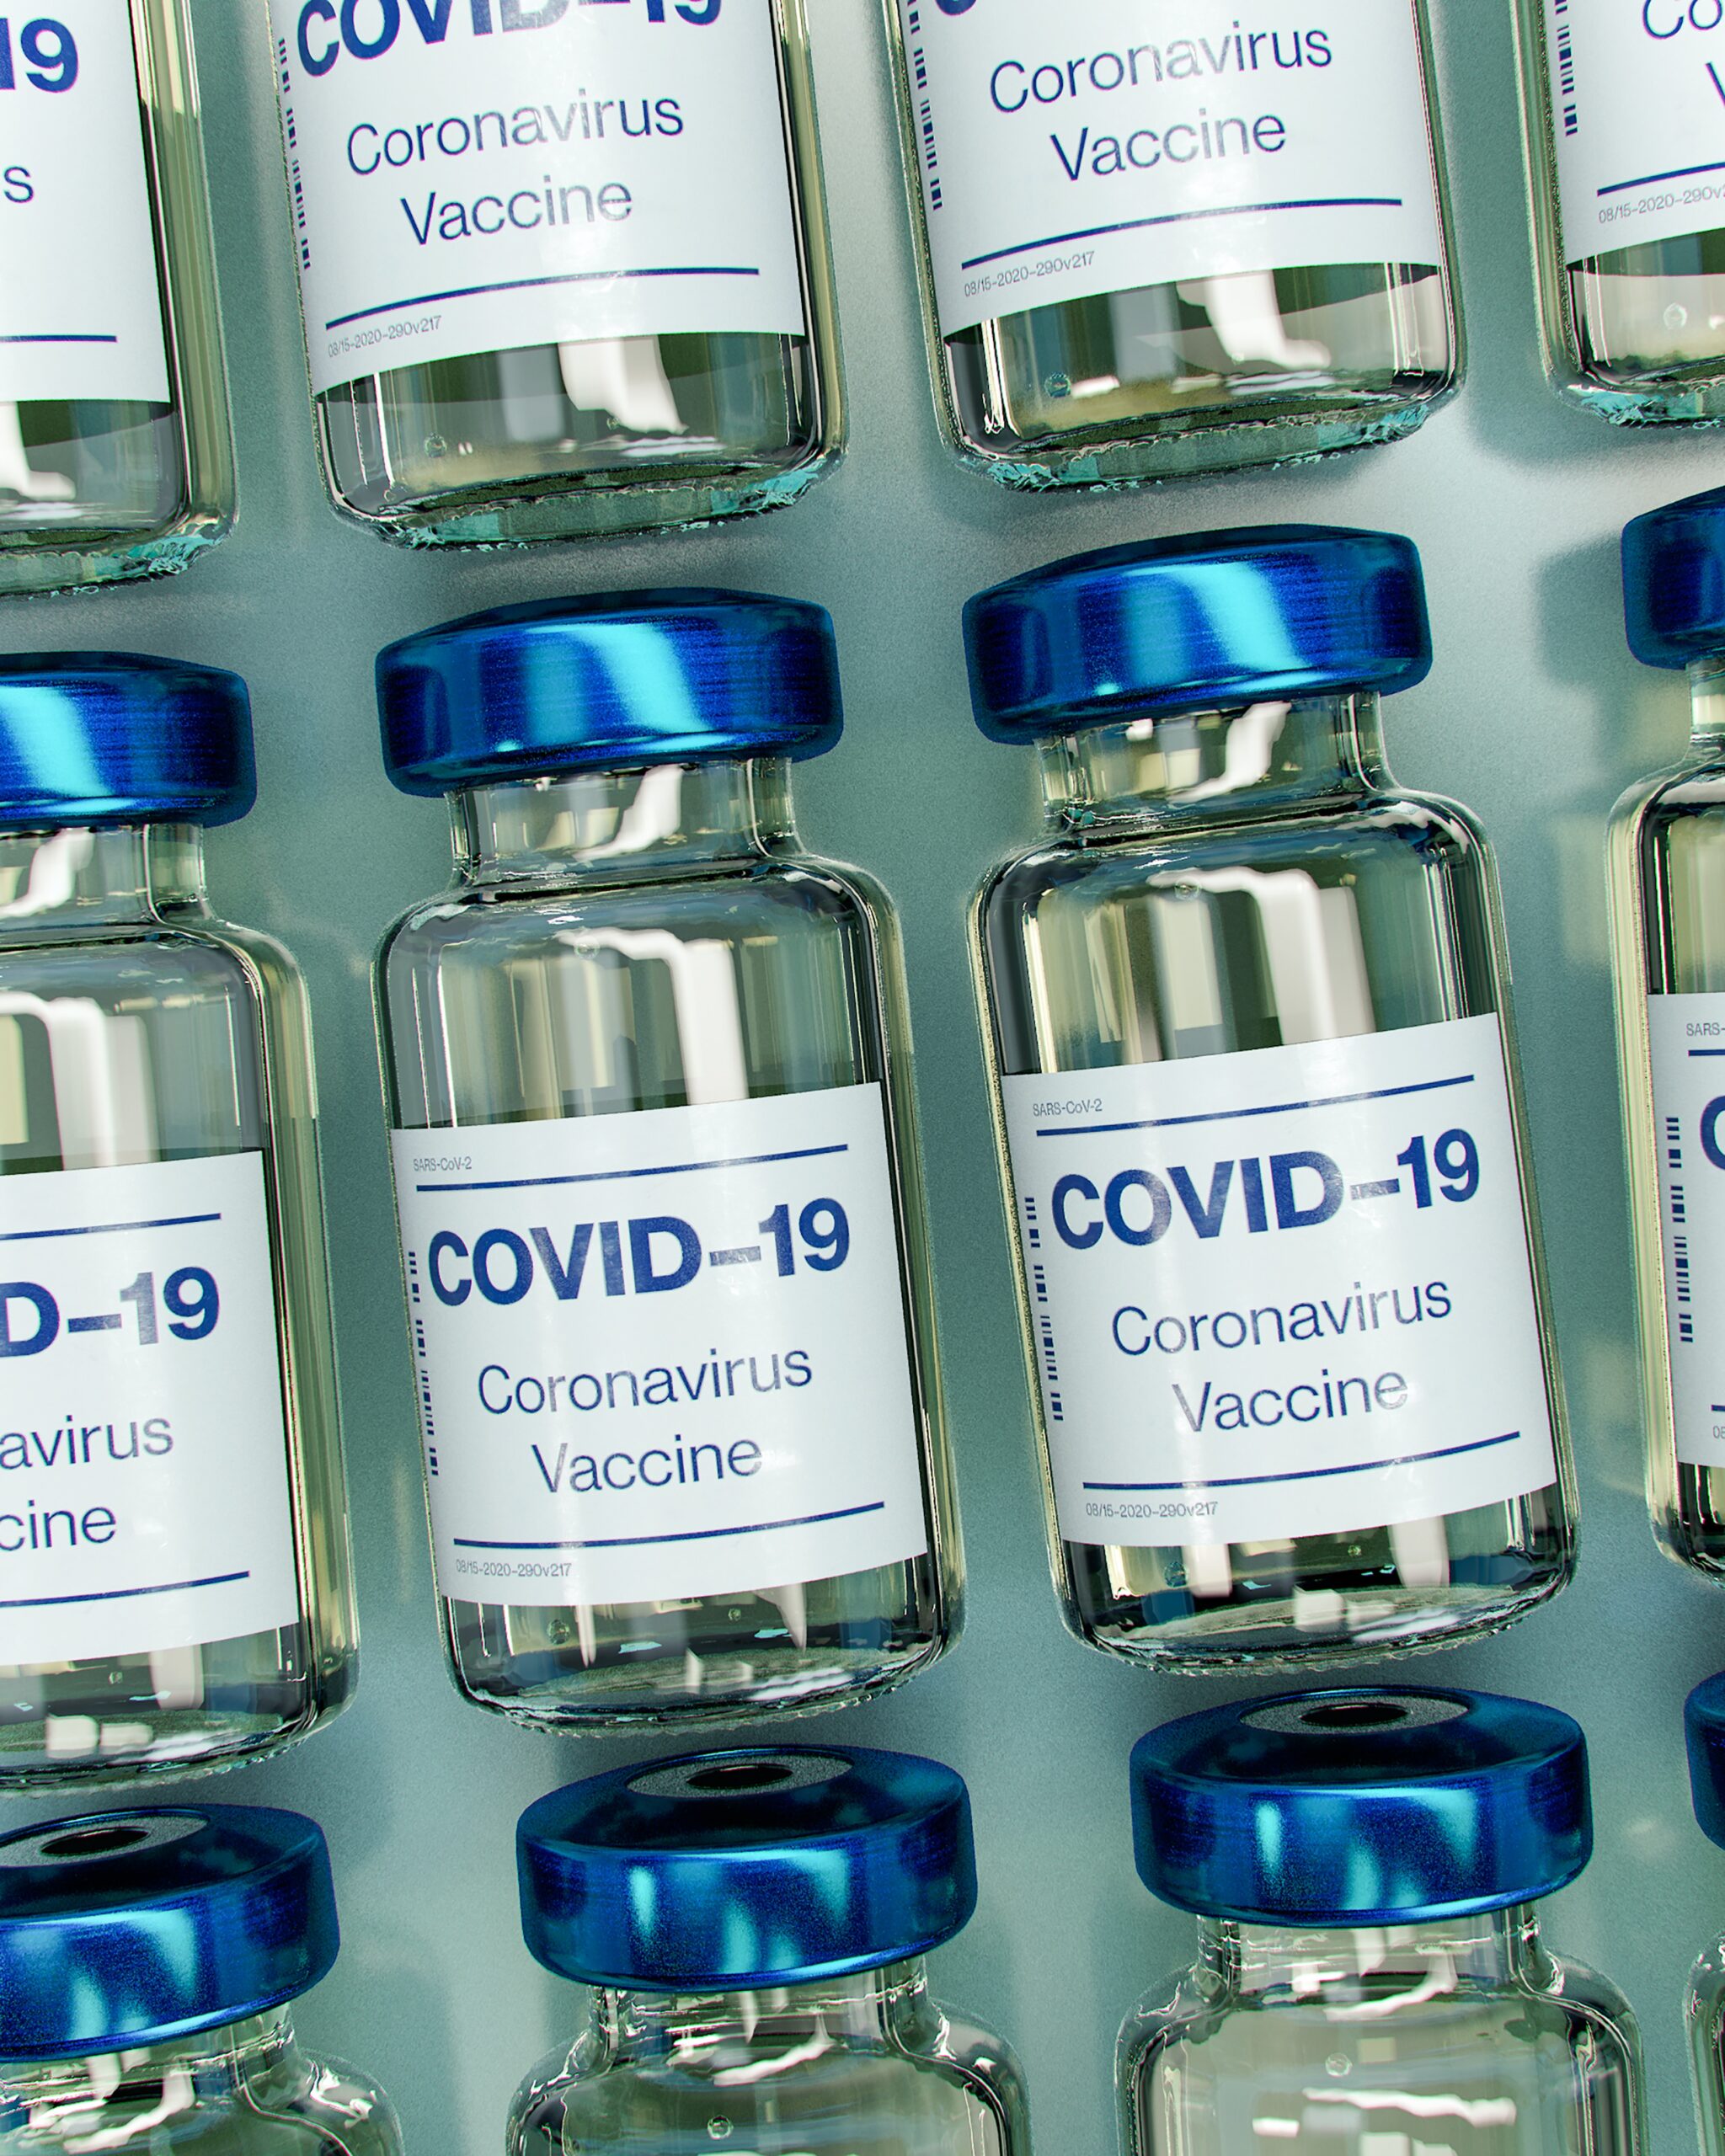 Covidioms: New Terminology Surrounding COVID